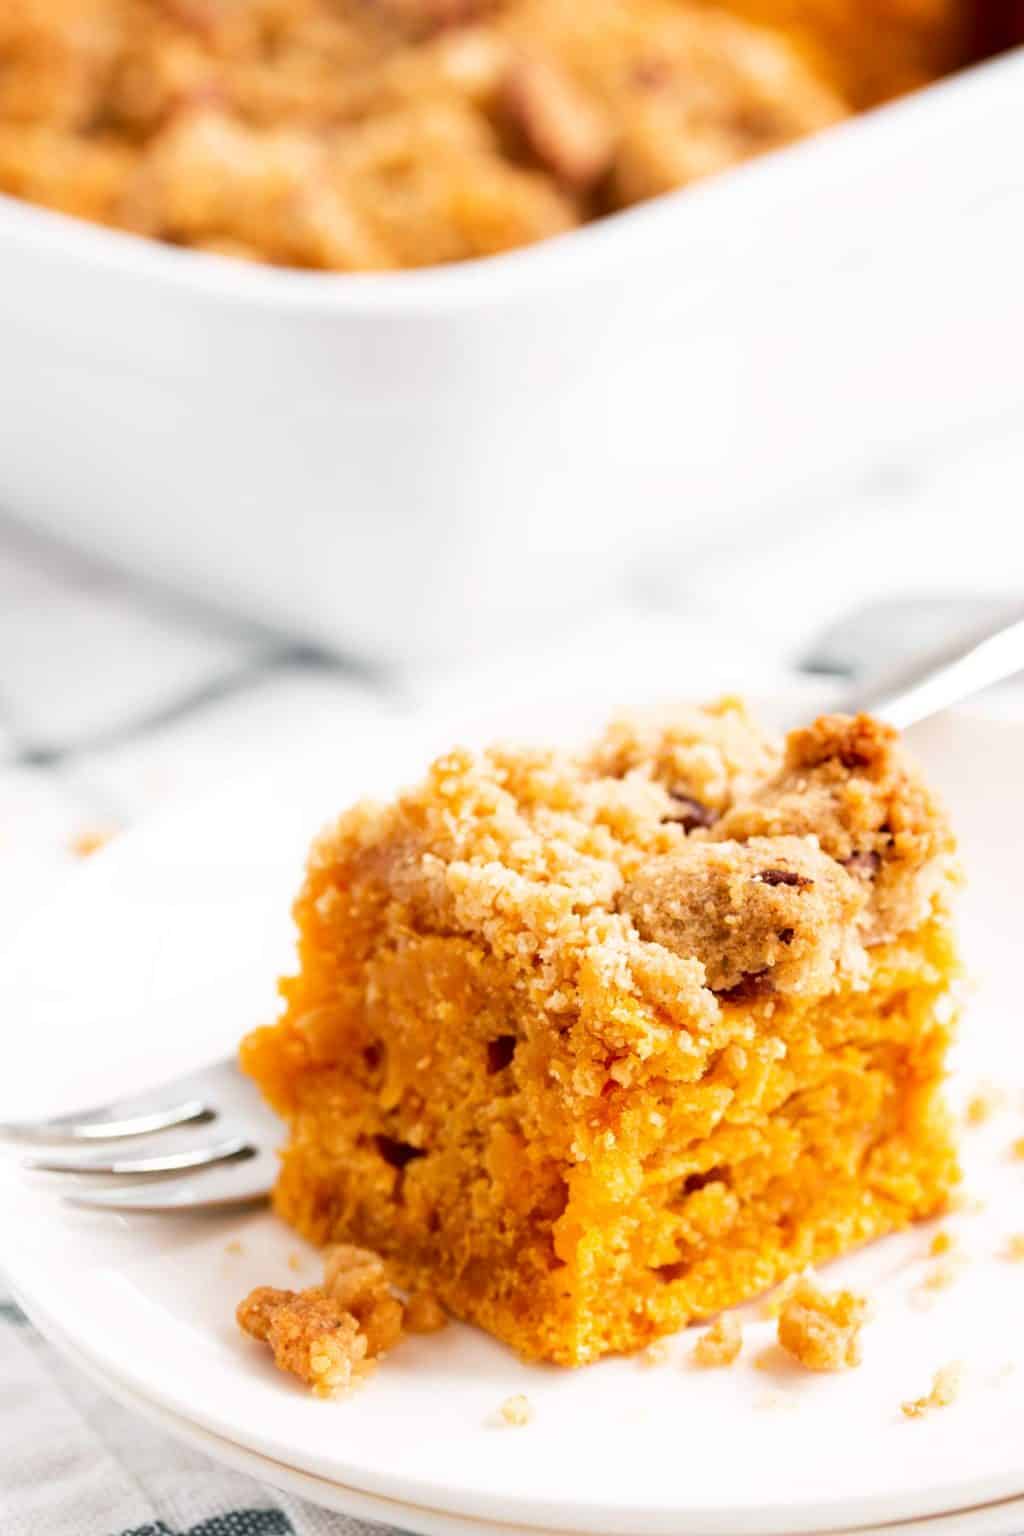 Sweet Potato Cake with Pecan Streusel - Simple Fall Dessert Recipe